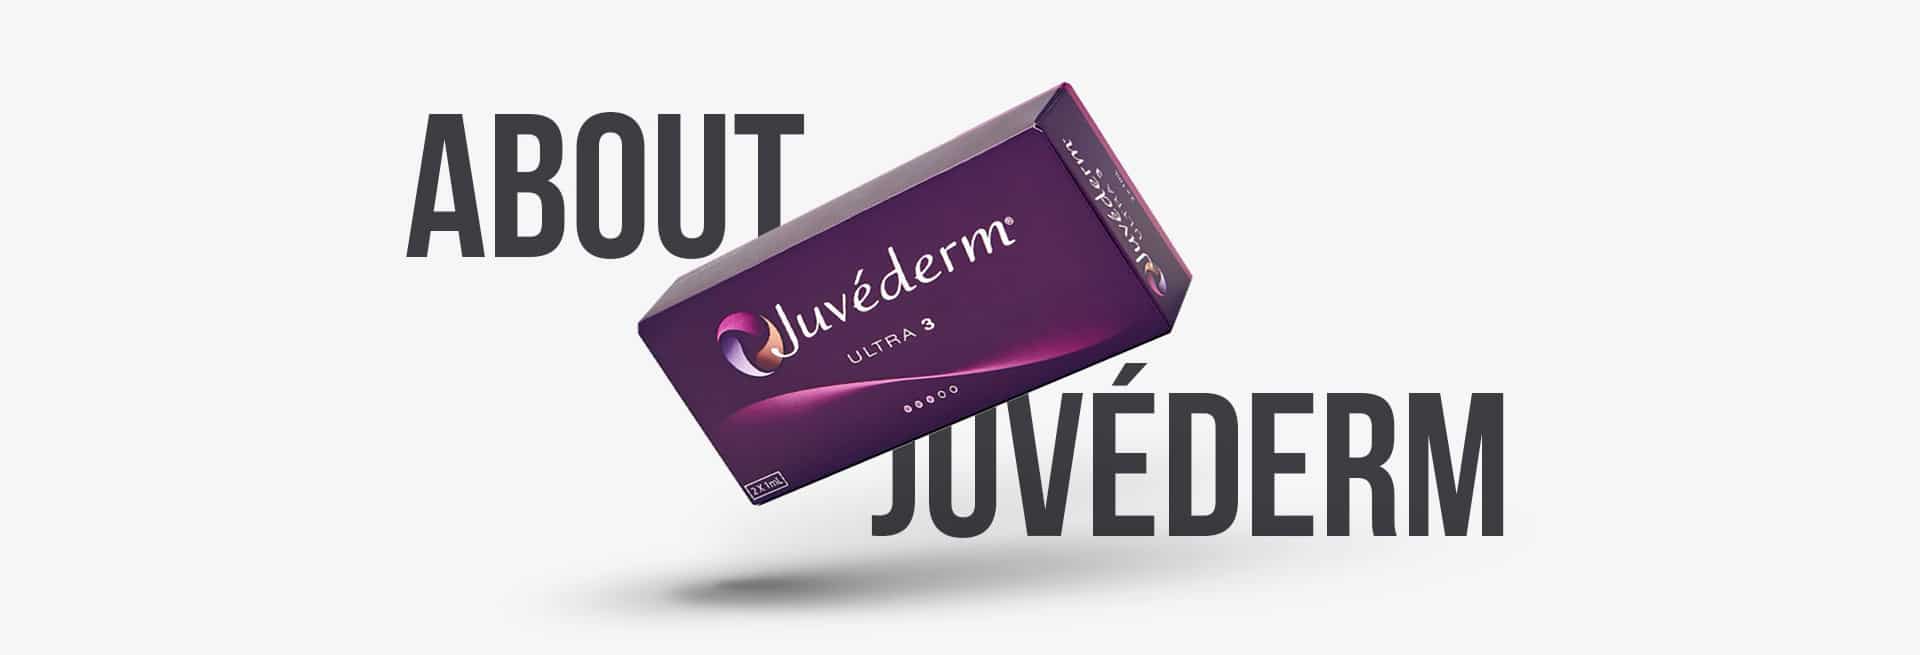 About Juvederm